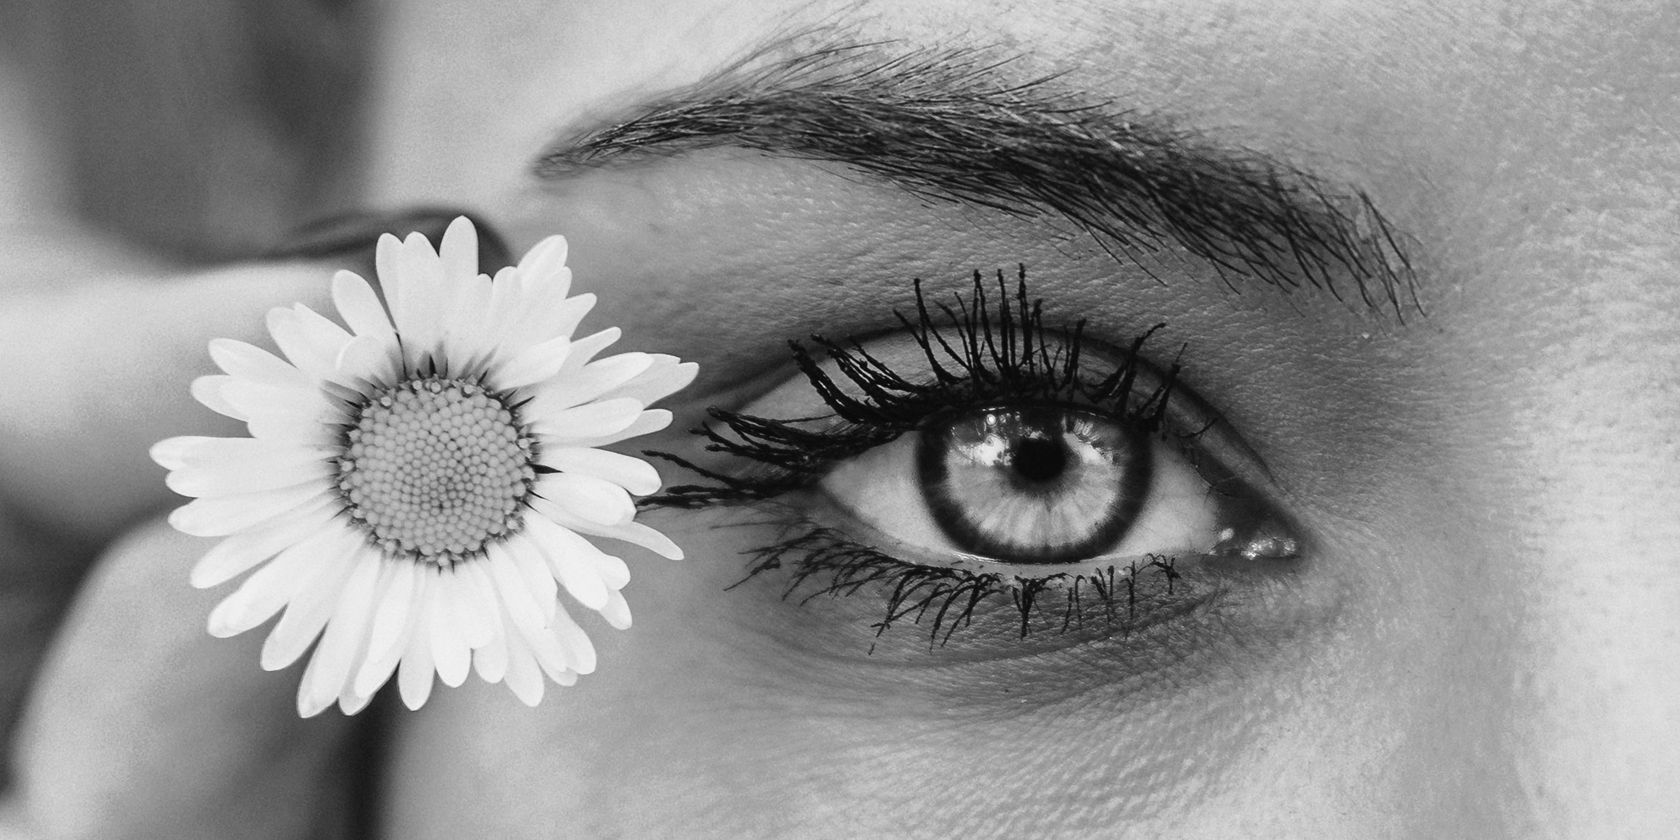 Eye with flower